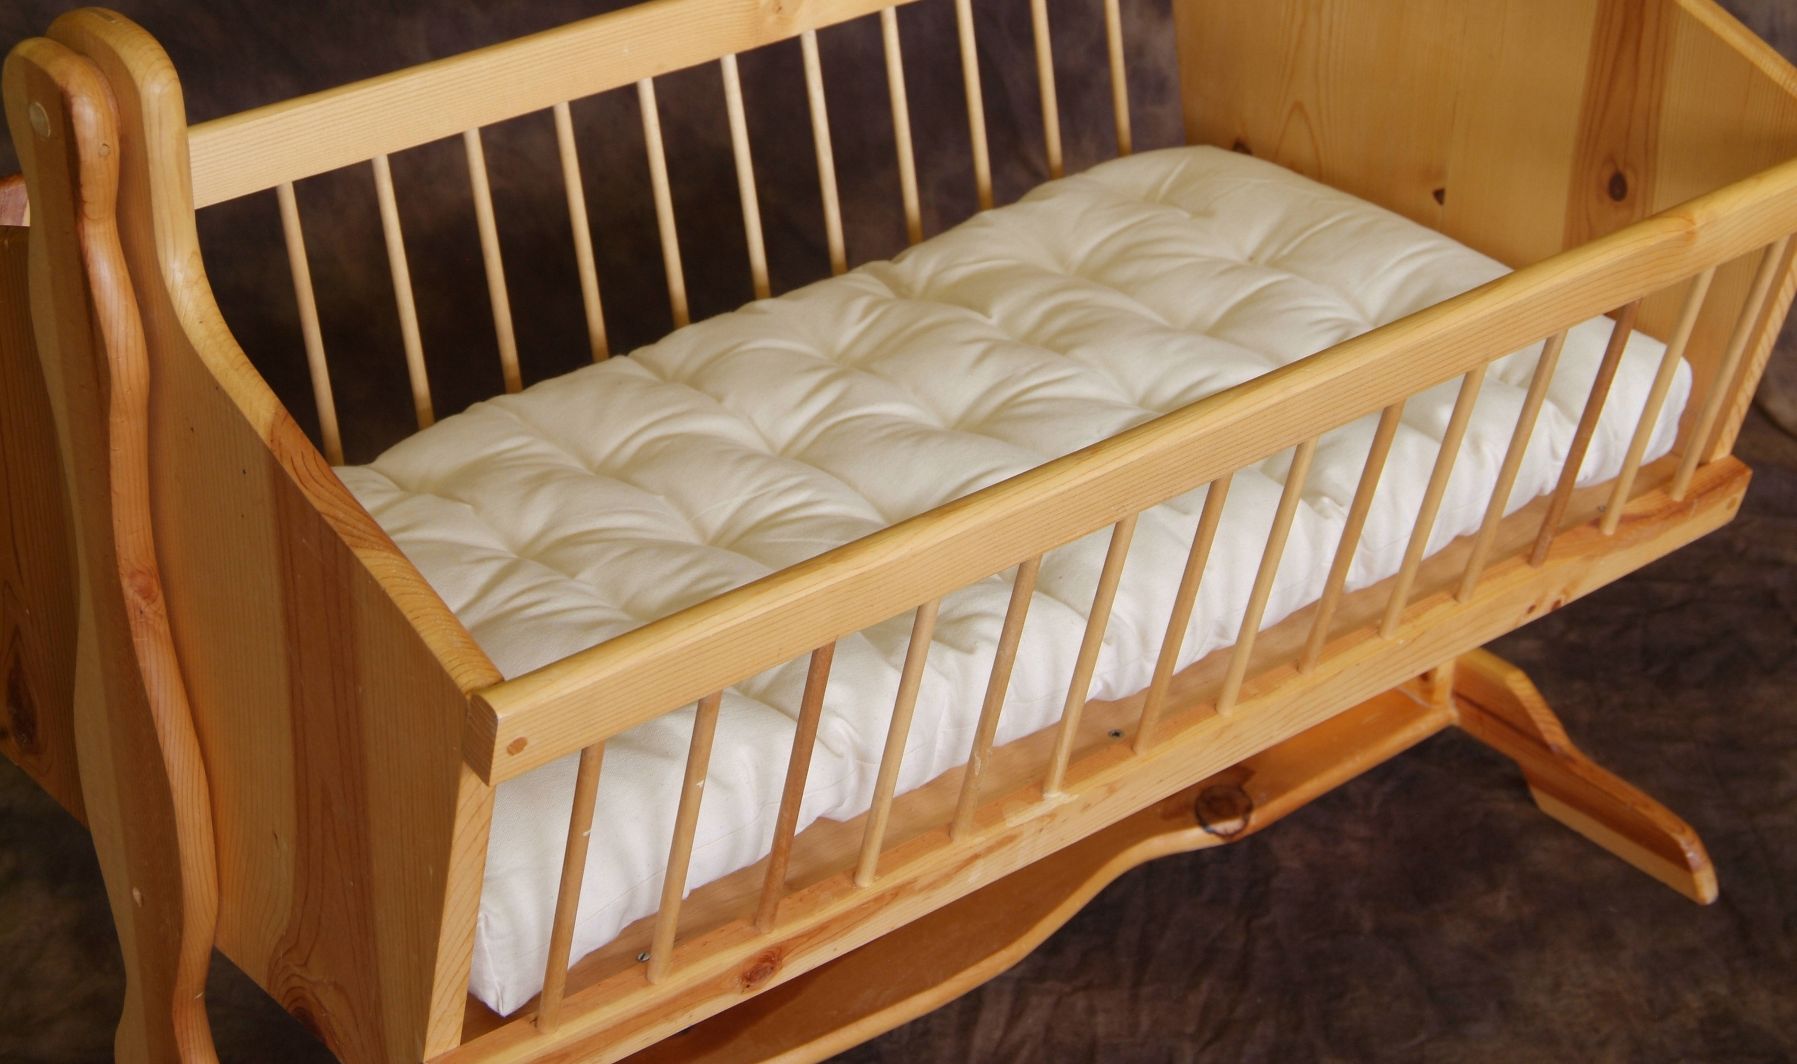 bednest bassinet mattress protector